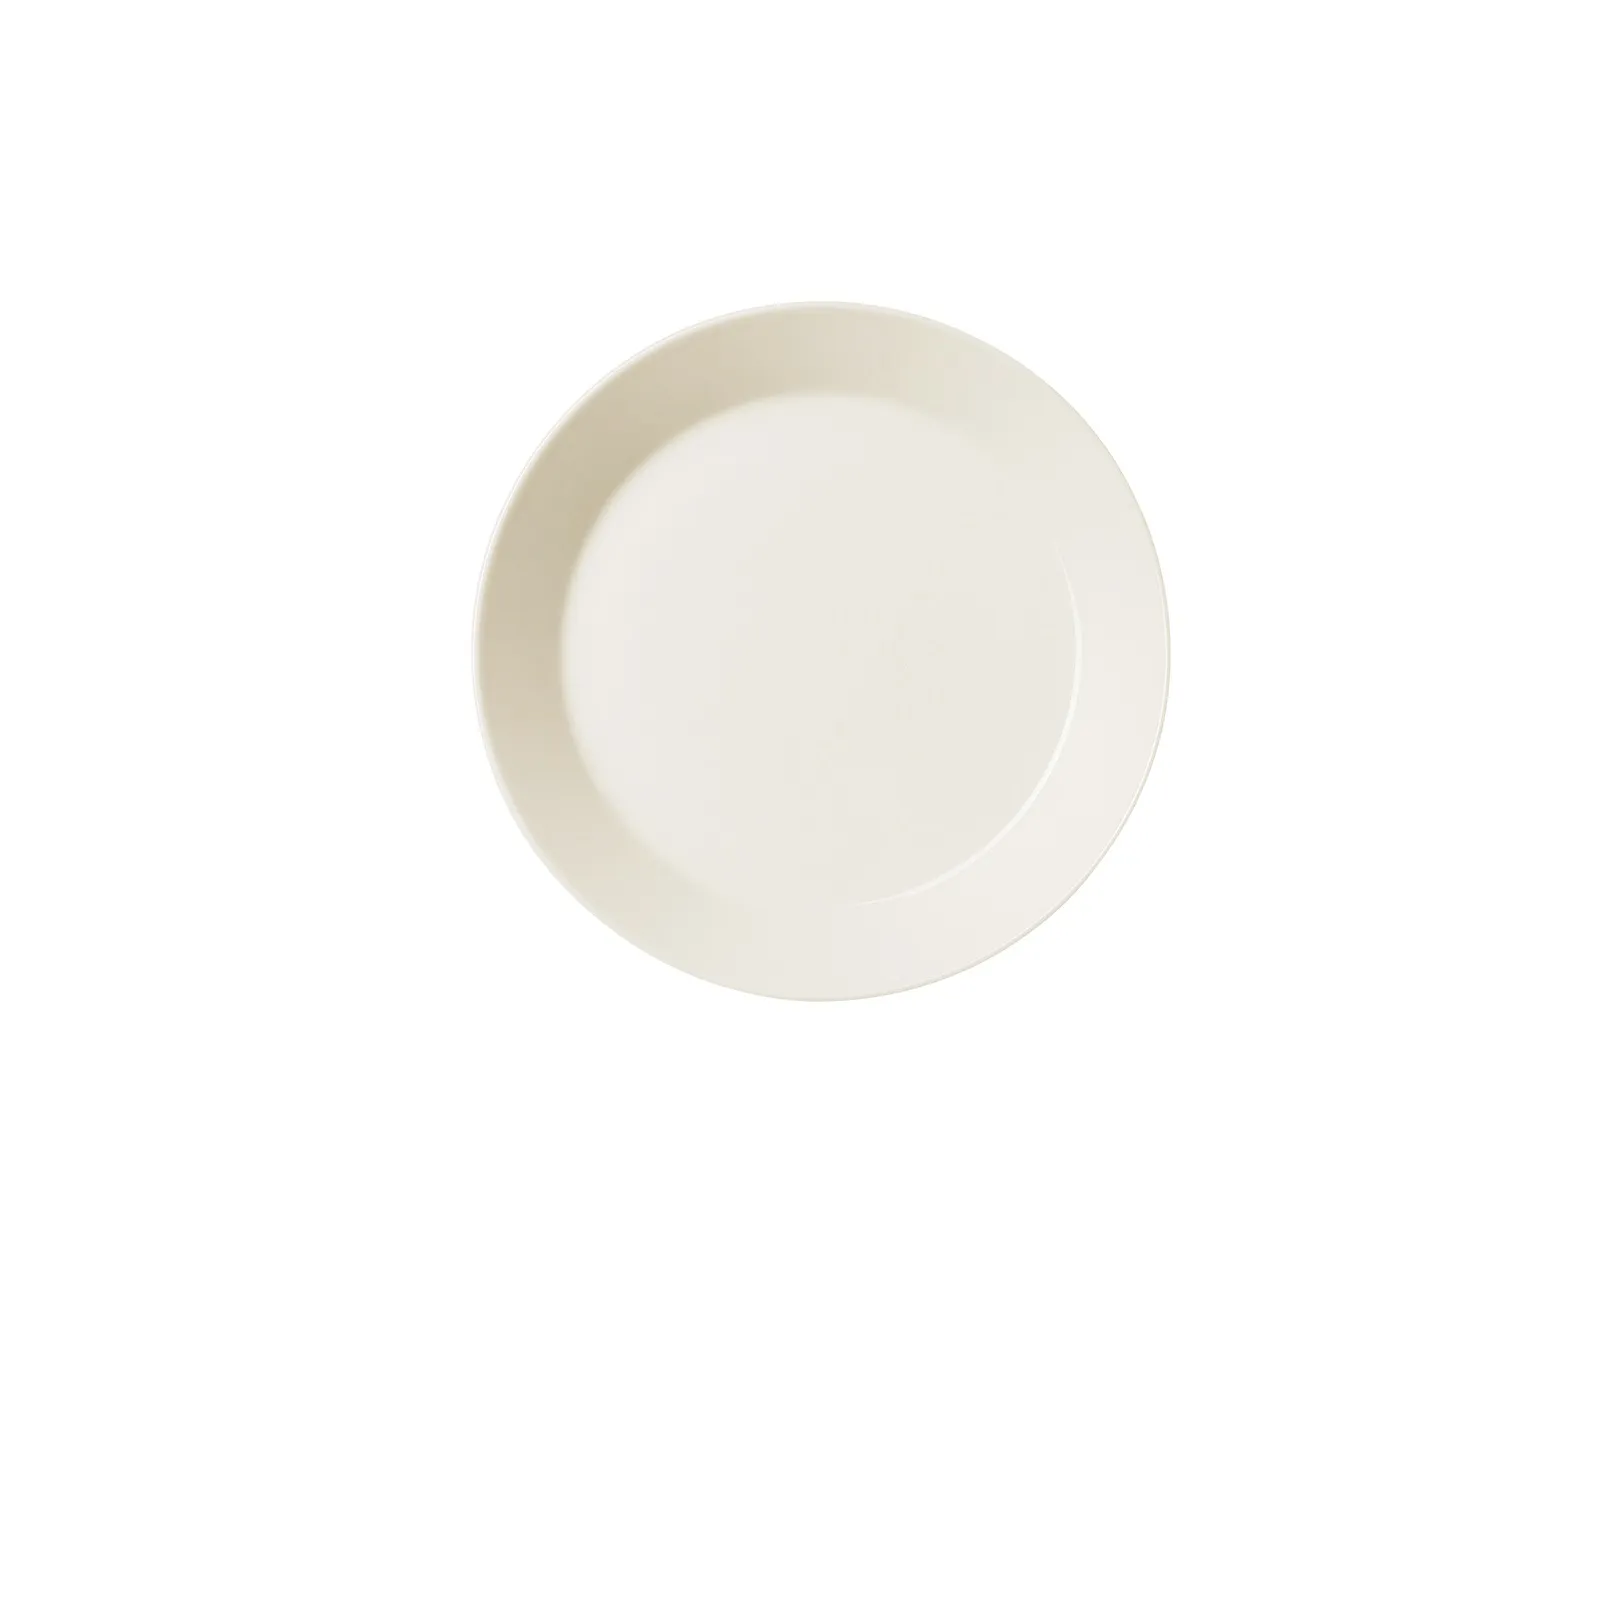 Iittala Teema plate 21 cm white